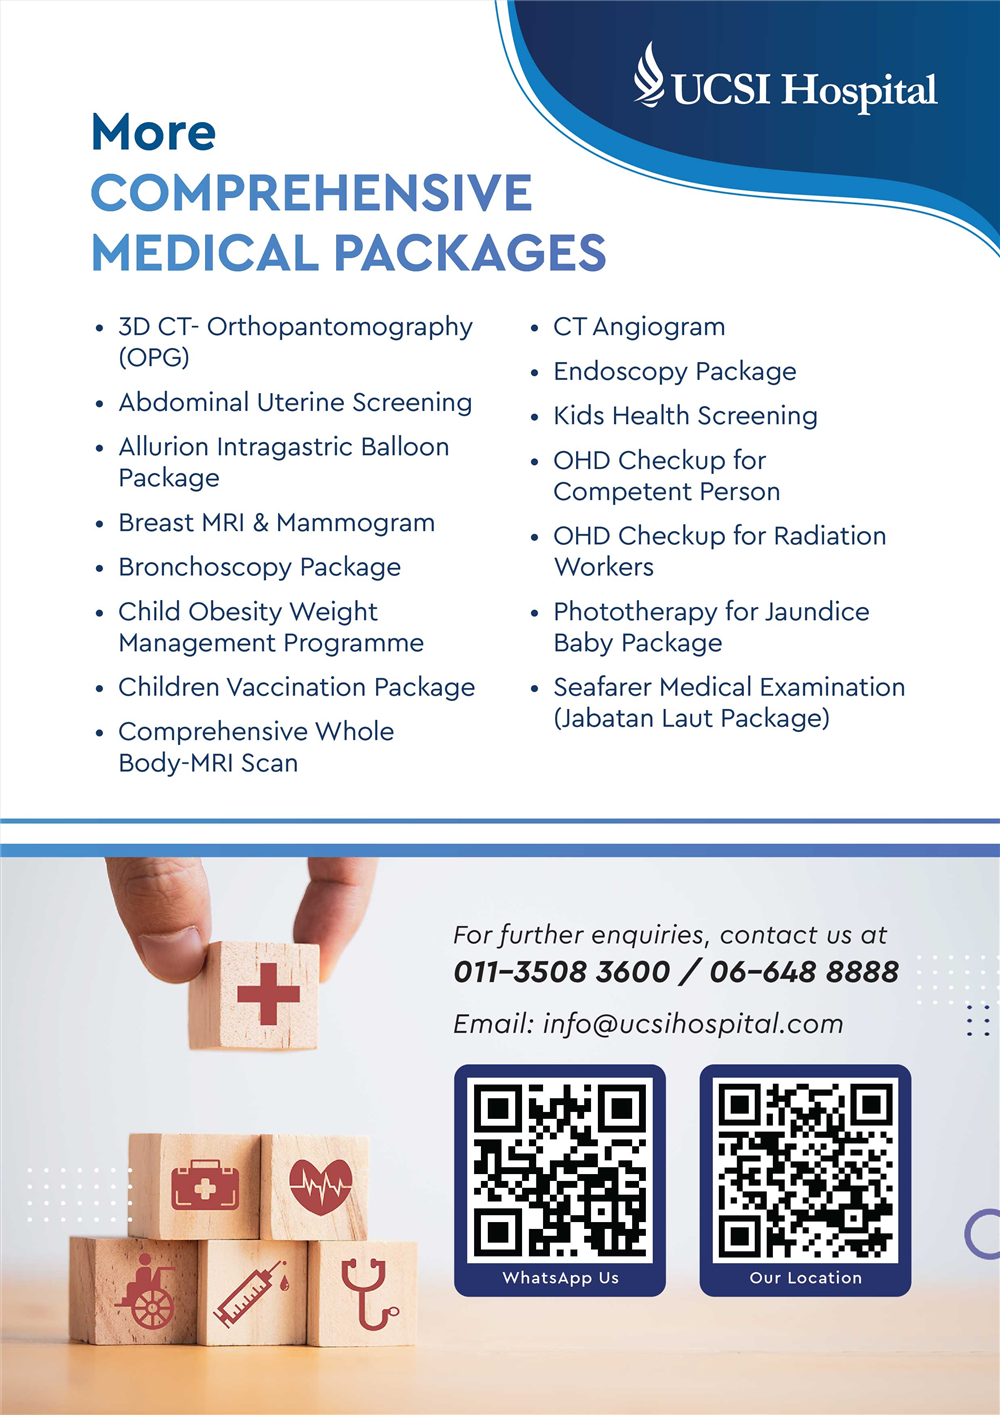 More Comprehensive Medical Packages